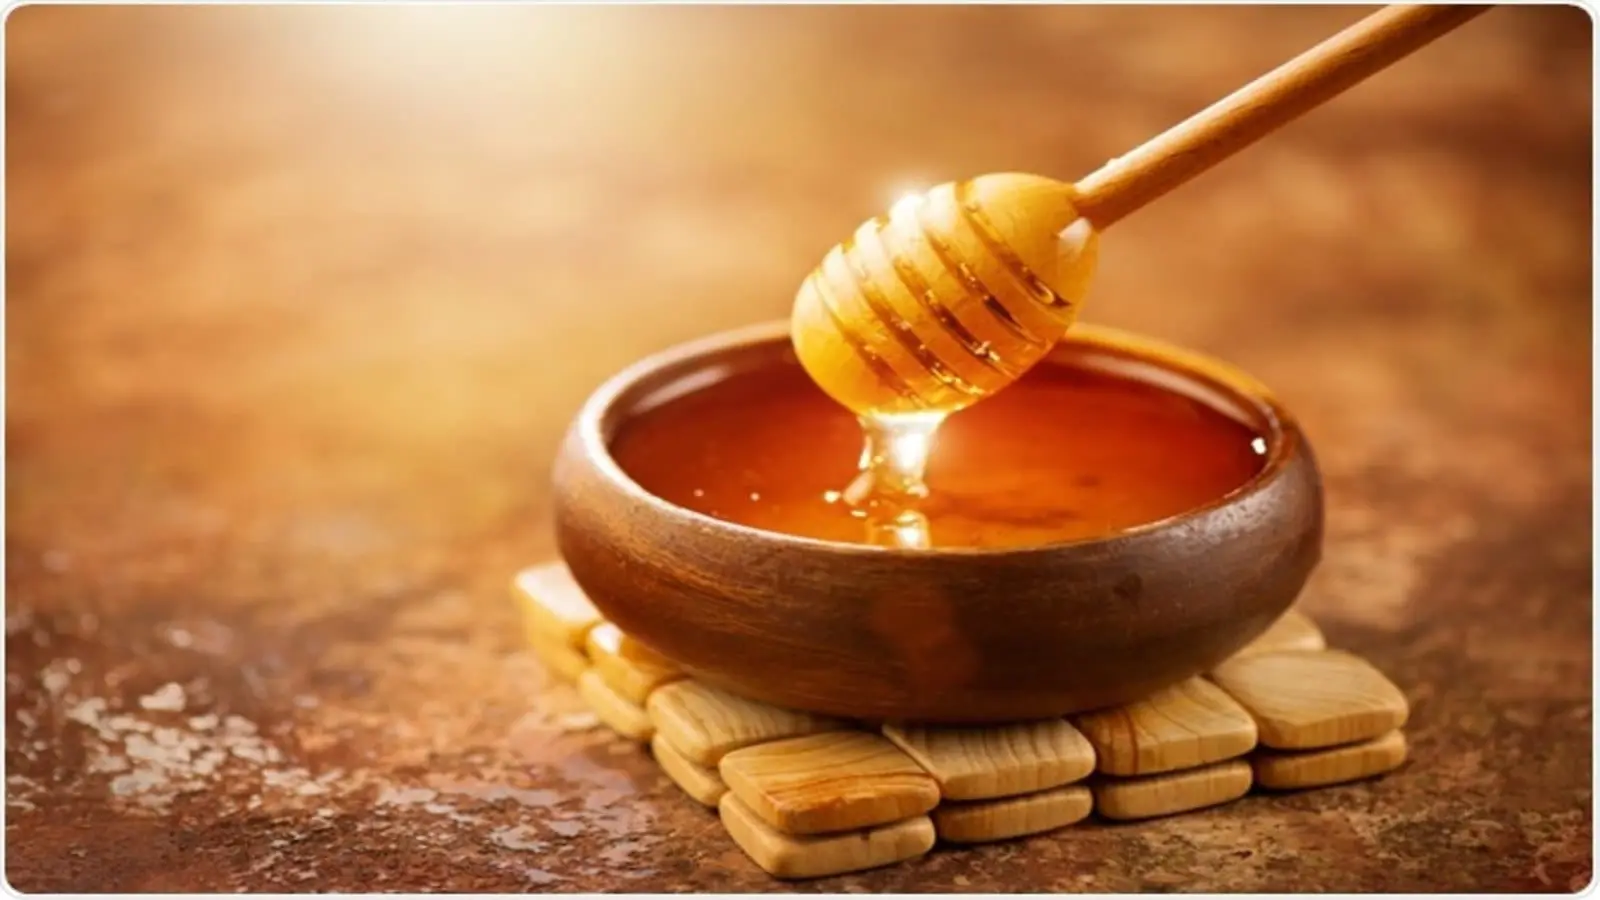 South Africa sends representatives to benchmark honey production art in Tanzania